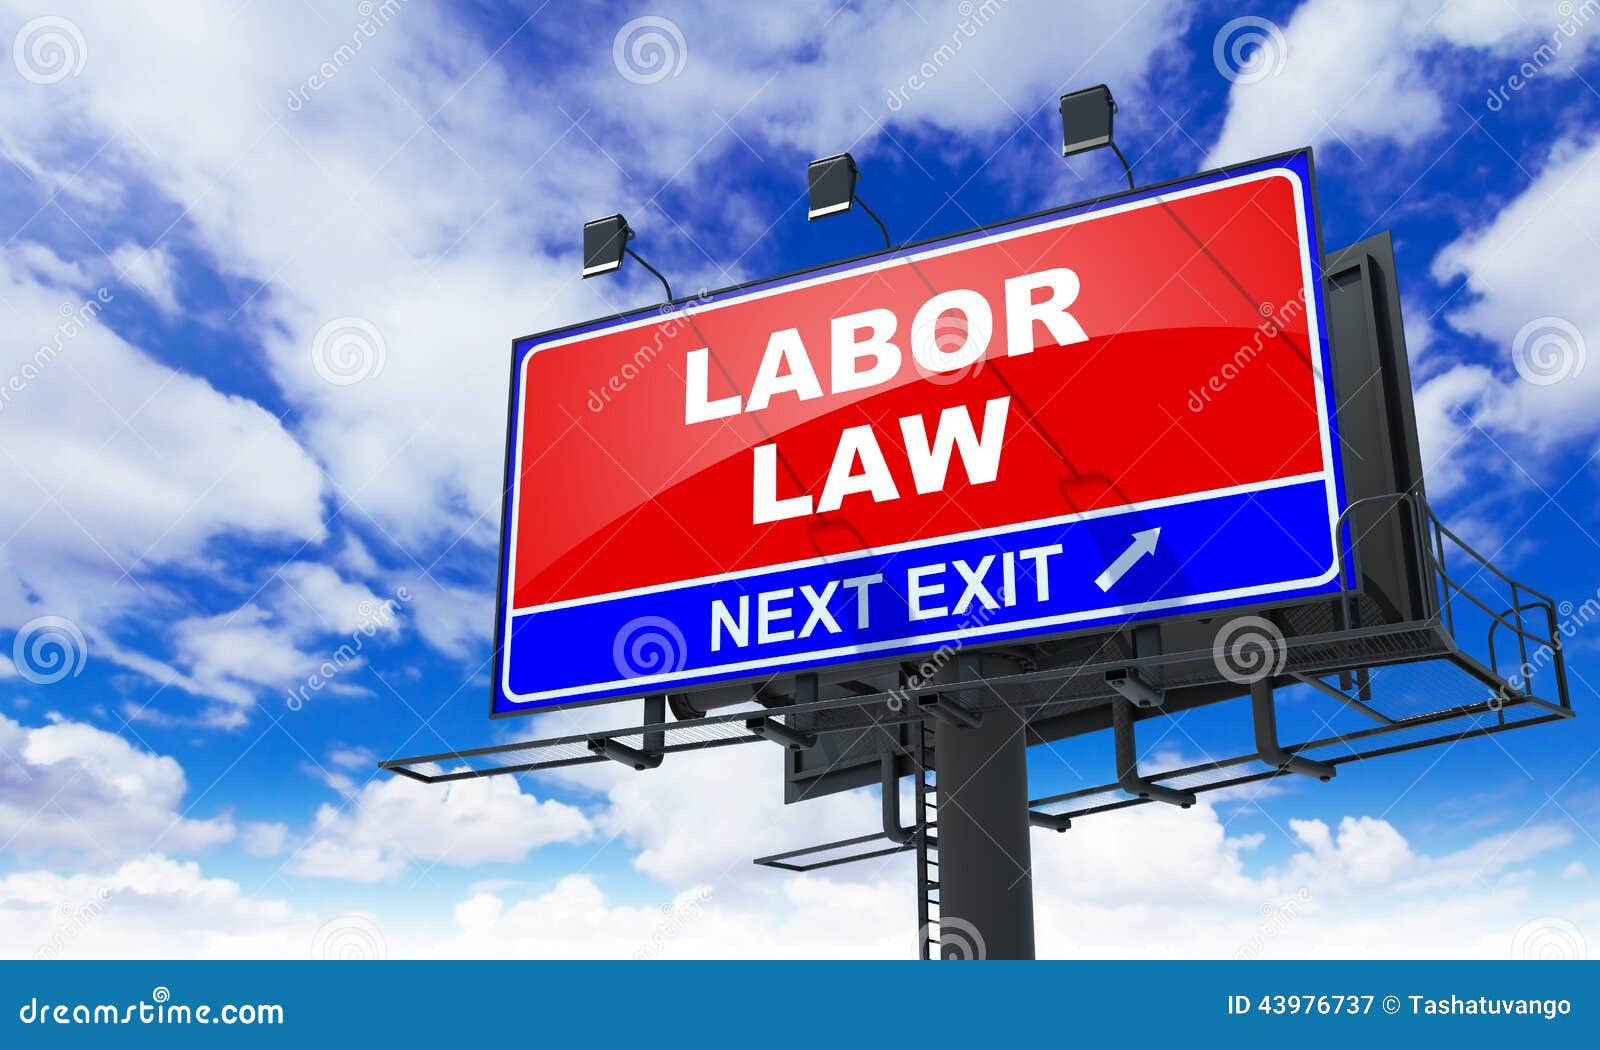 labor law on red billboard.